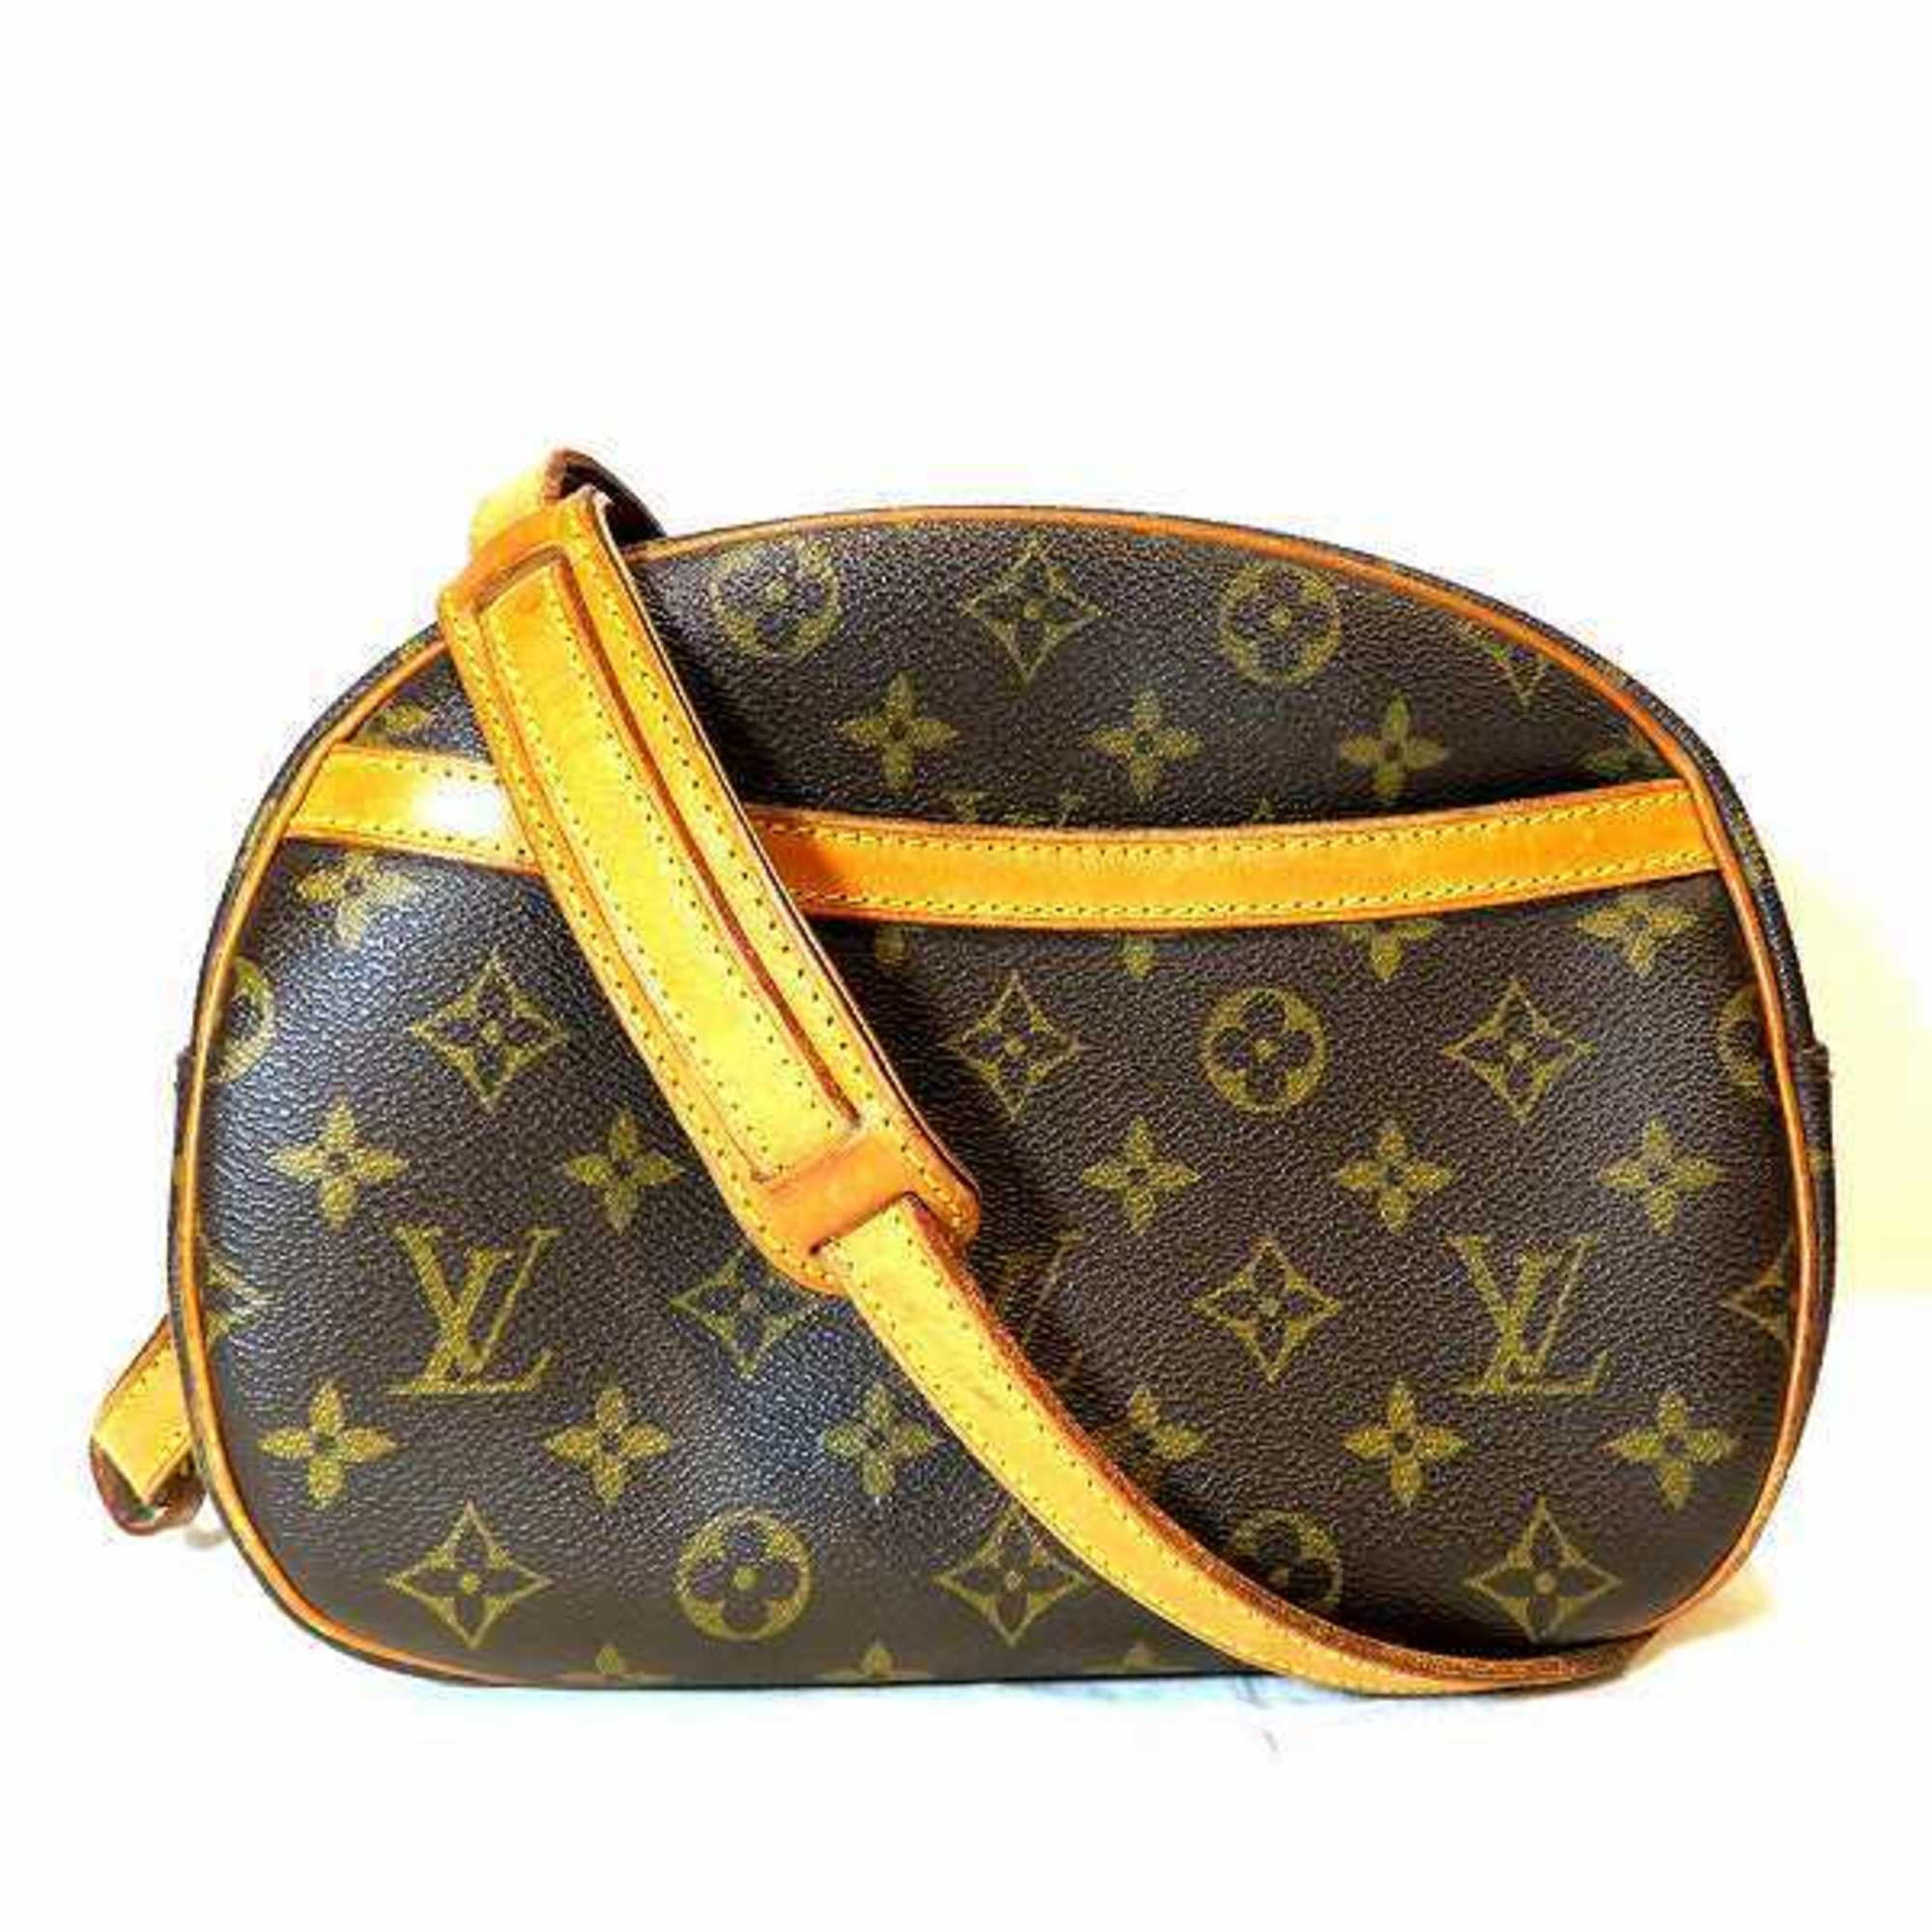 Authenticated Used Louis Vuitton Monogram Blois M51221 Bag